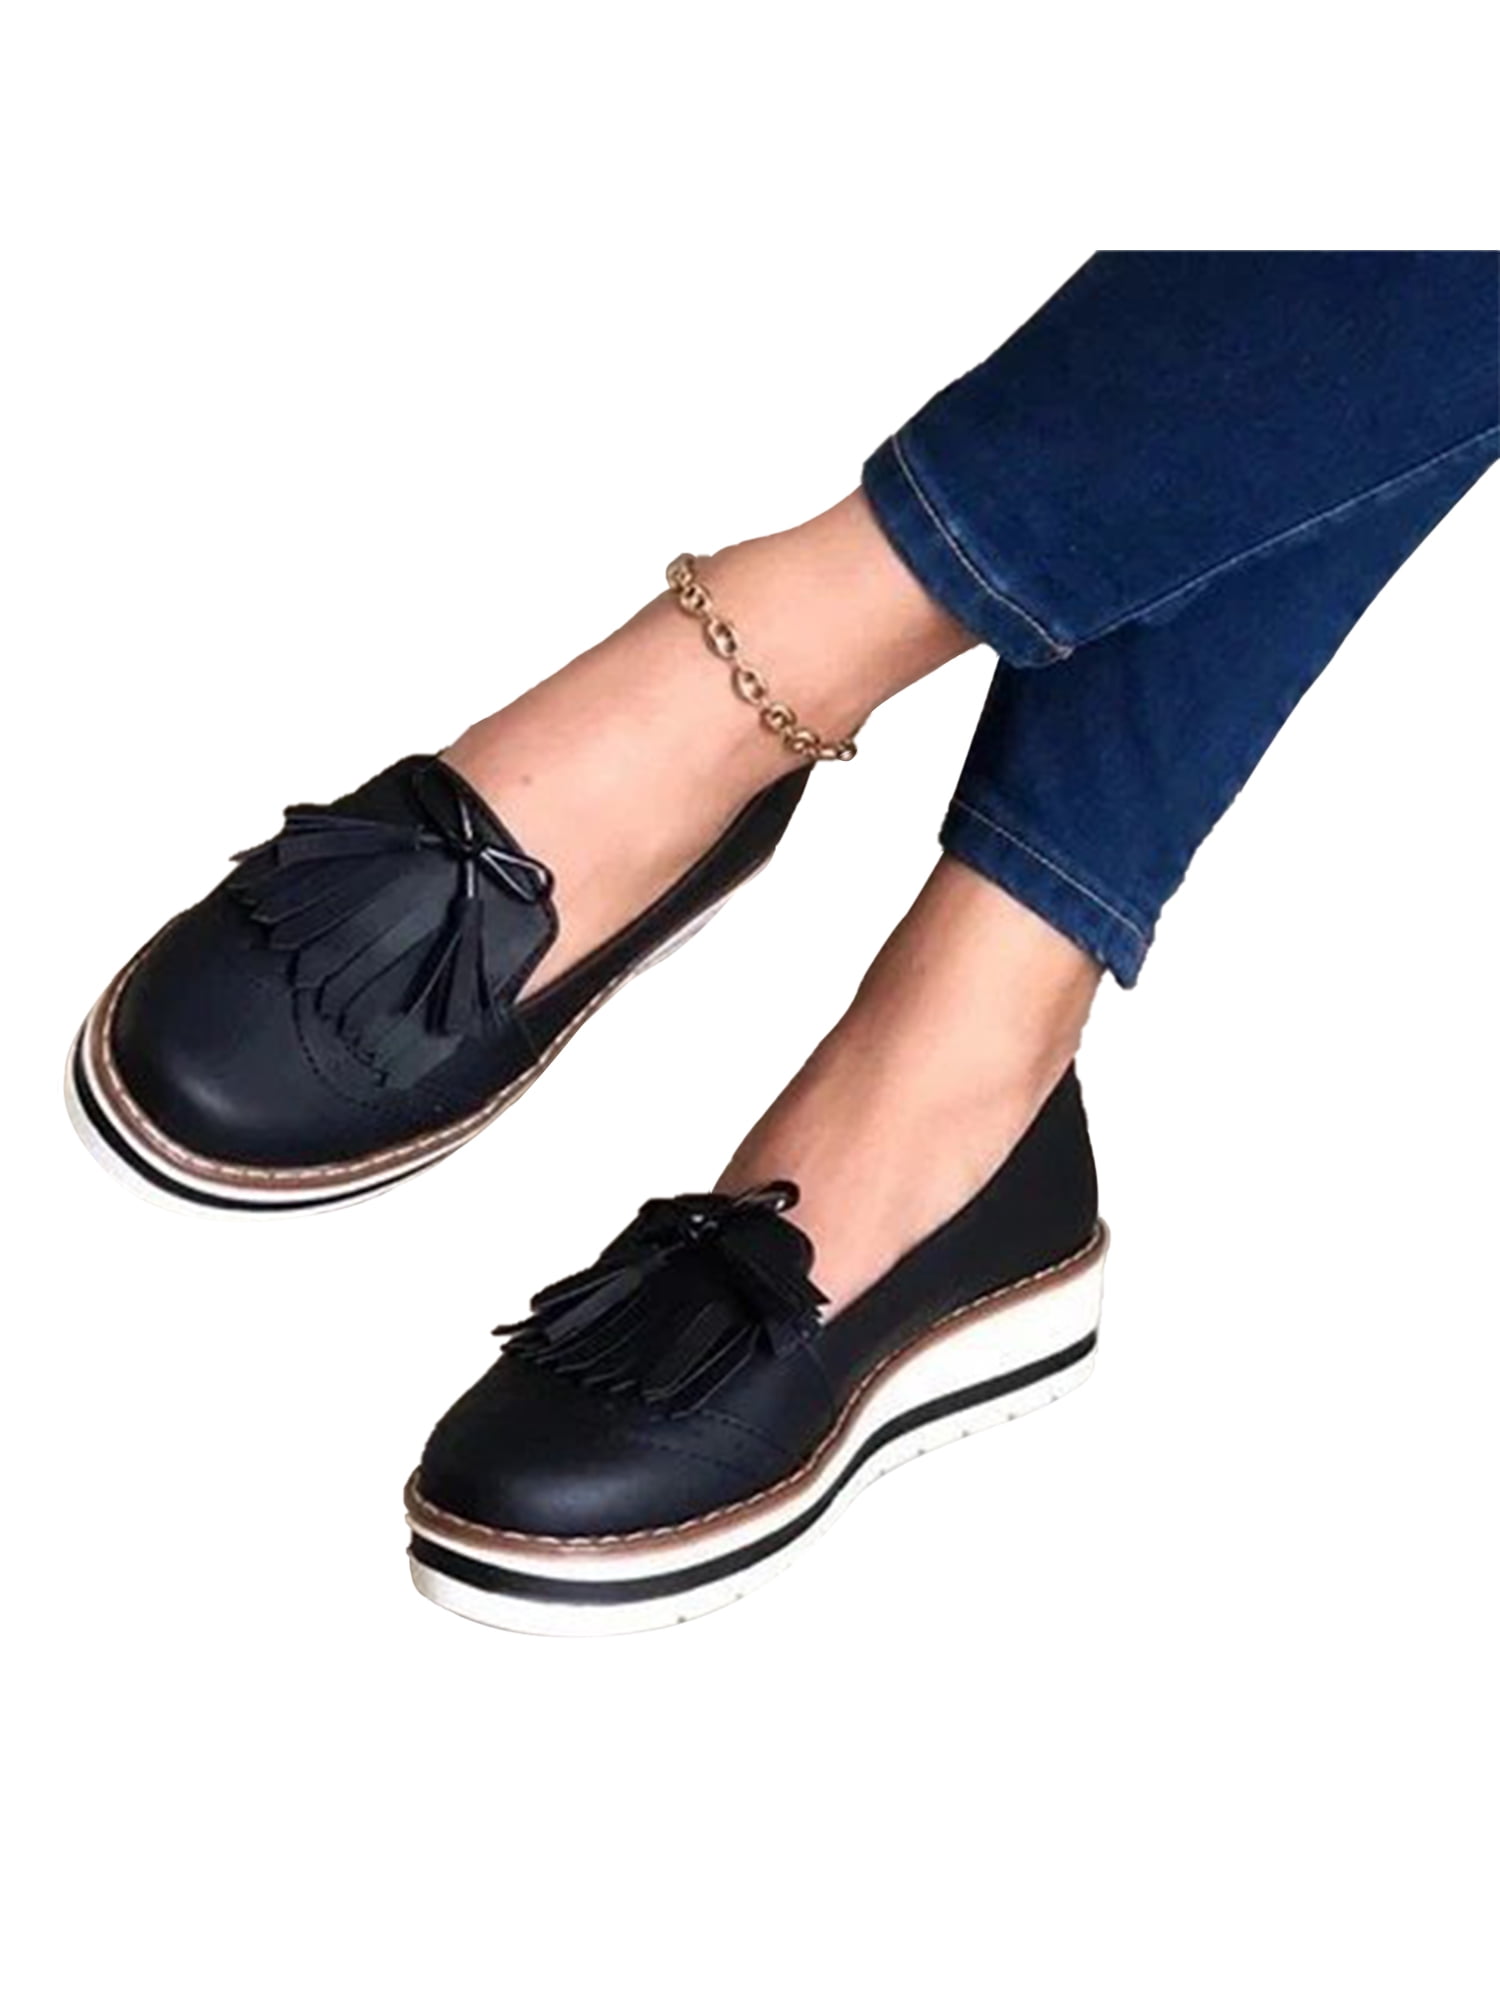 Womens Platform Espadrille Canvas Shoes Tassel Closed Toe Cutout Comfort Flat Sneakers Slip On Wedges Shoes Black, US:6